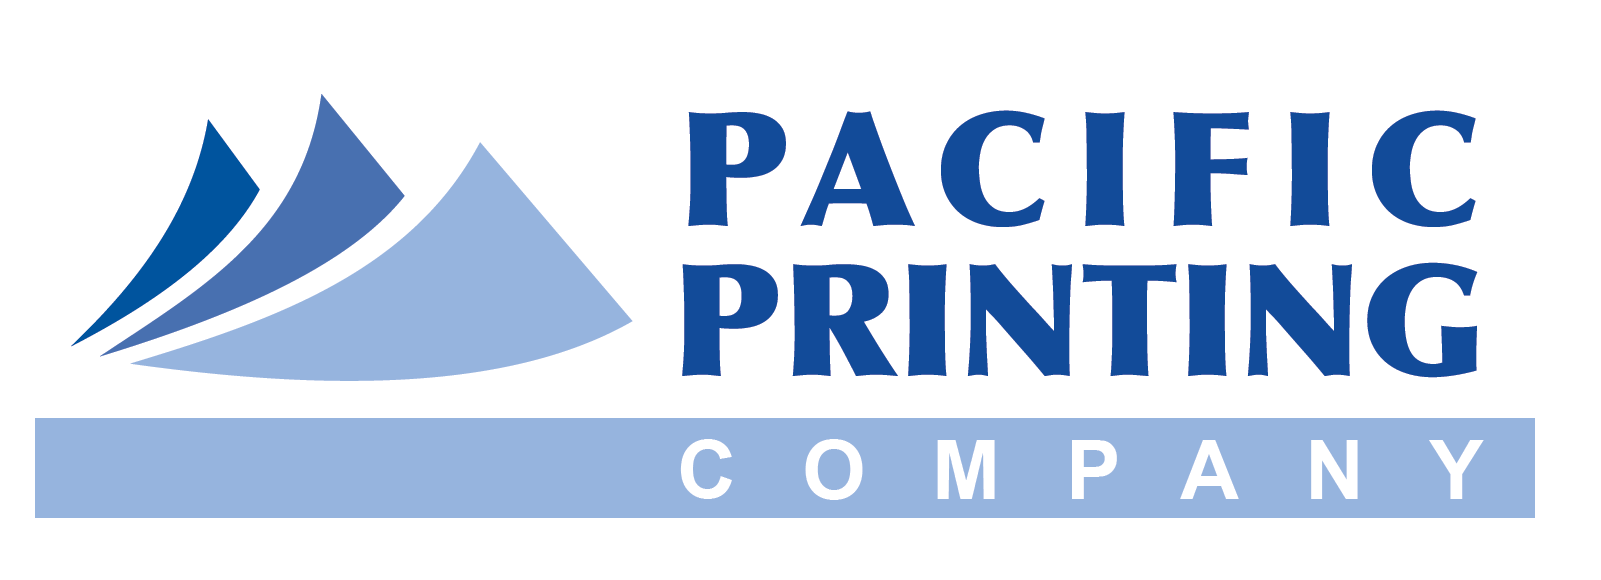 Pacific Printing Company